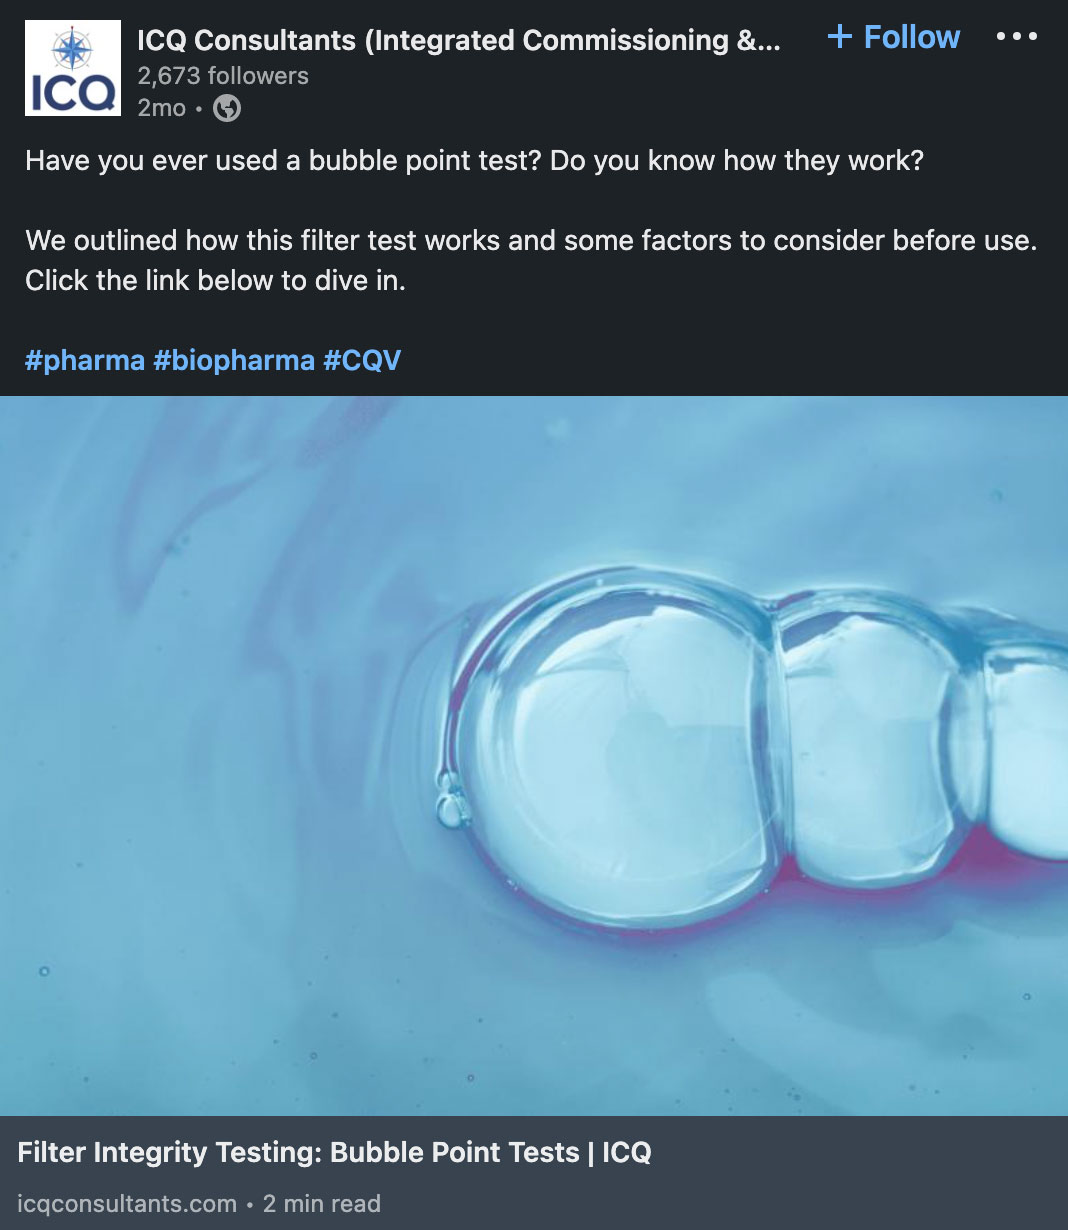 ICQ LinkedIn ad design example